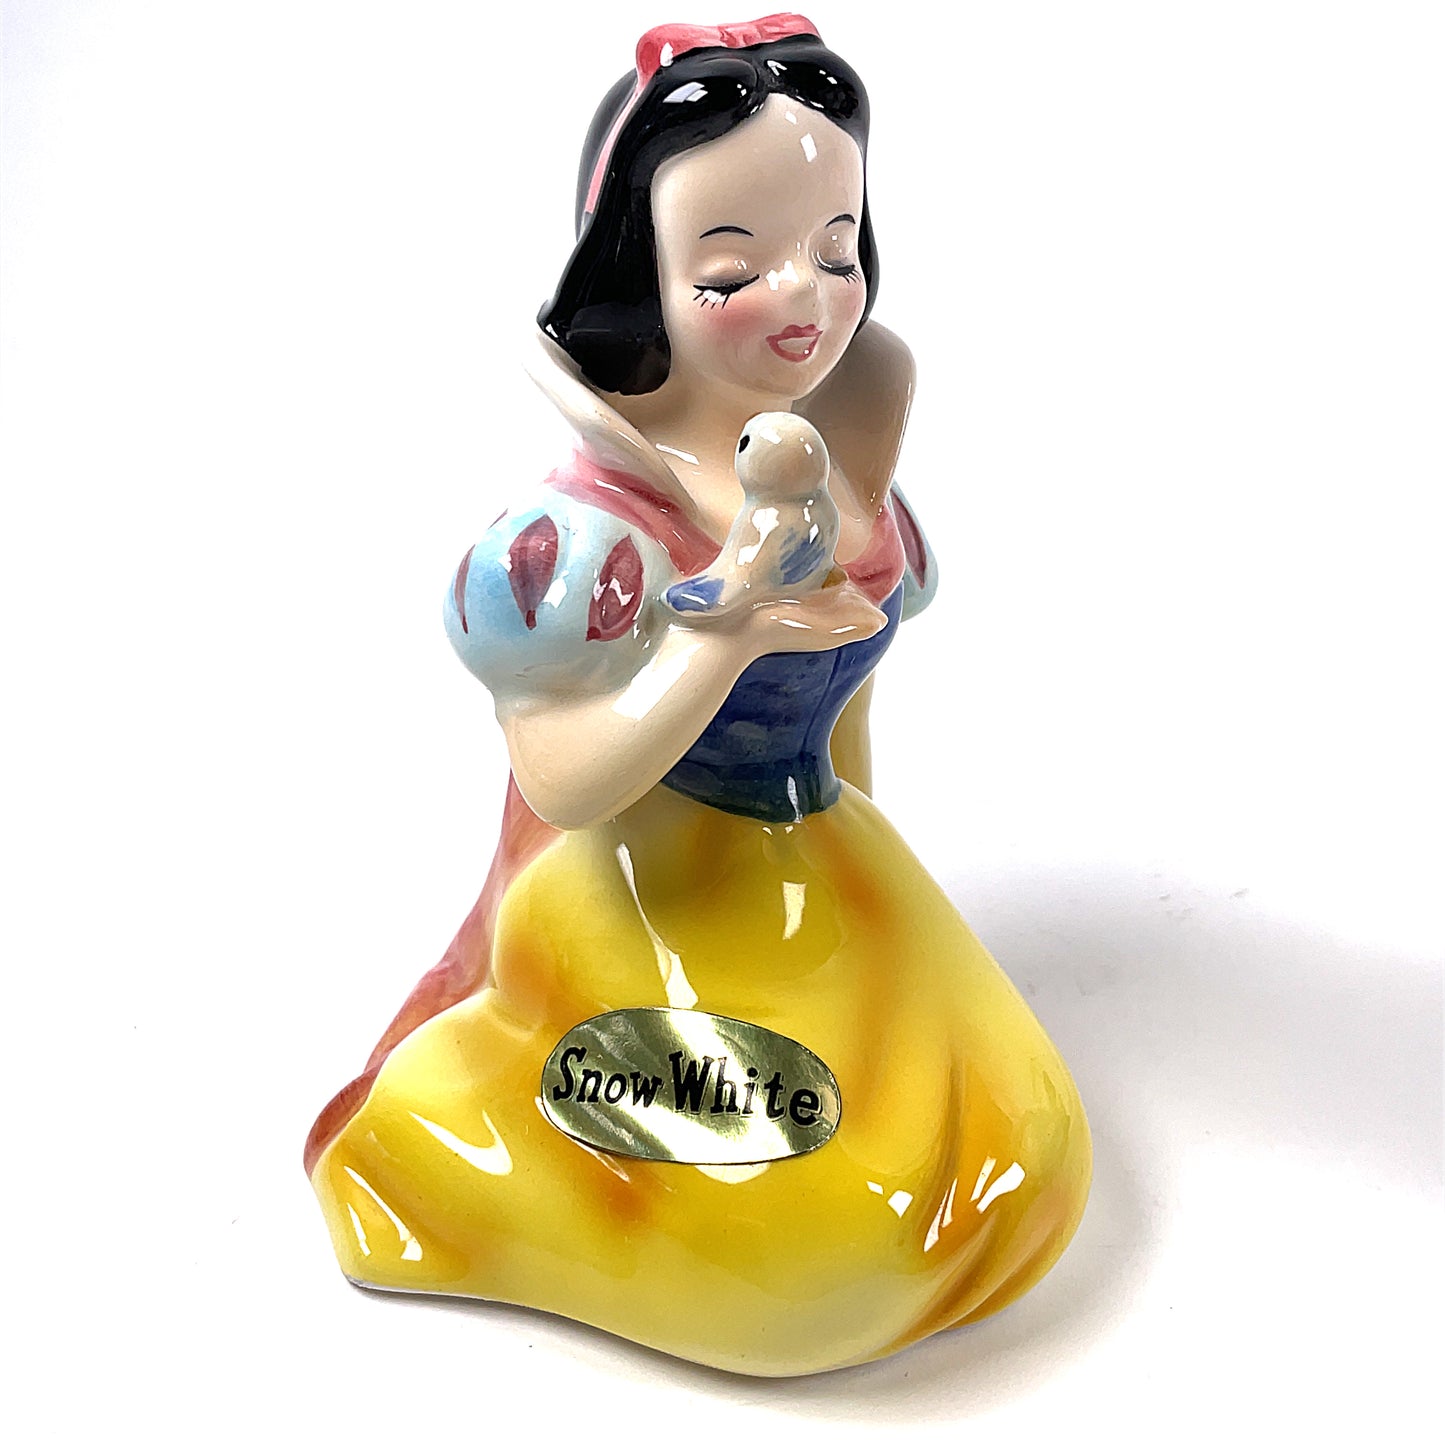 Vintage Enesco Disney Snow White and the Seven Dwarfs Figurines Japan